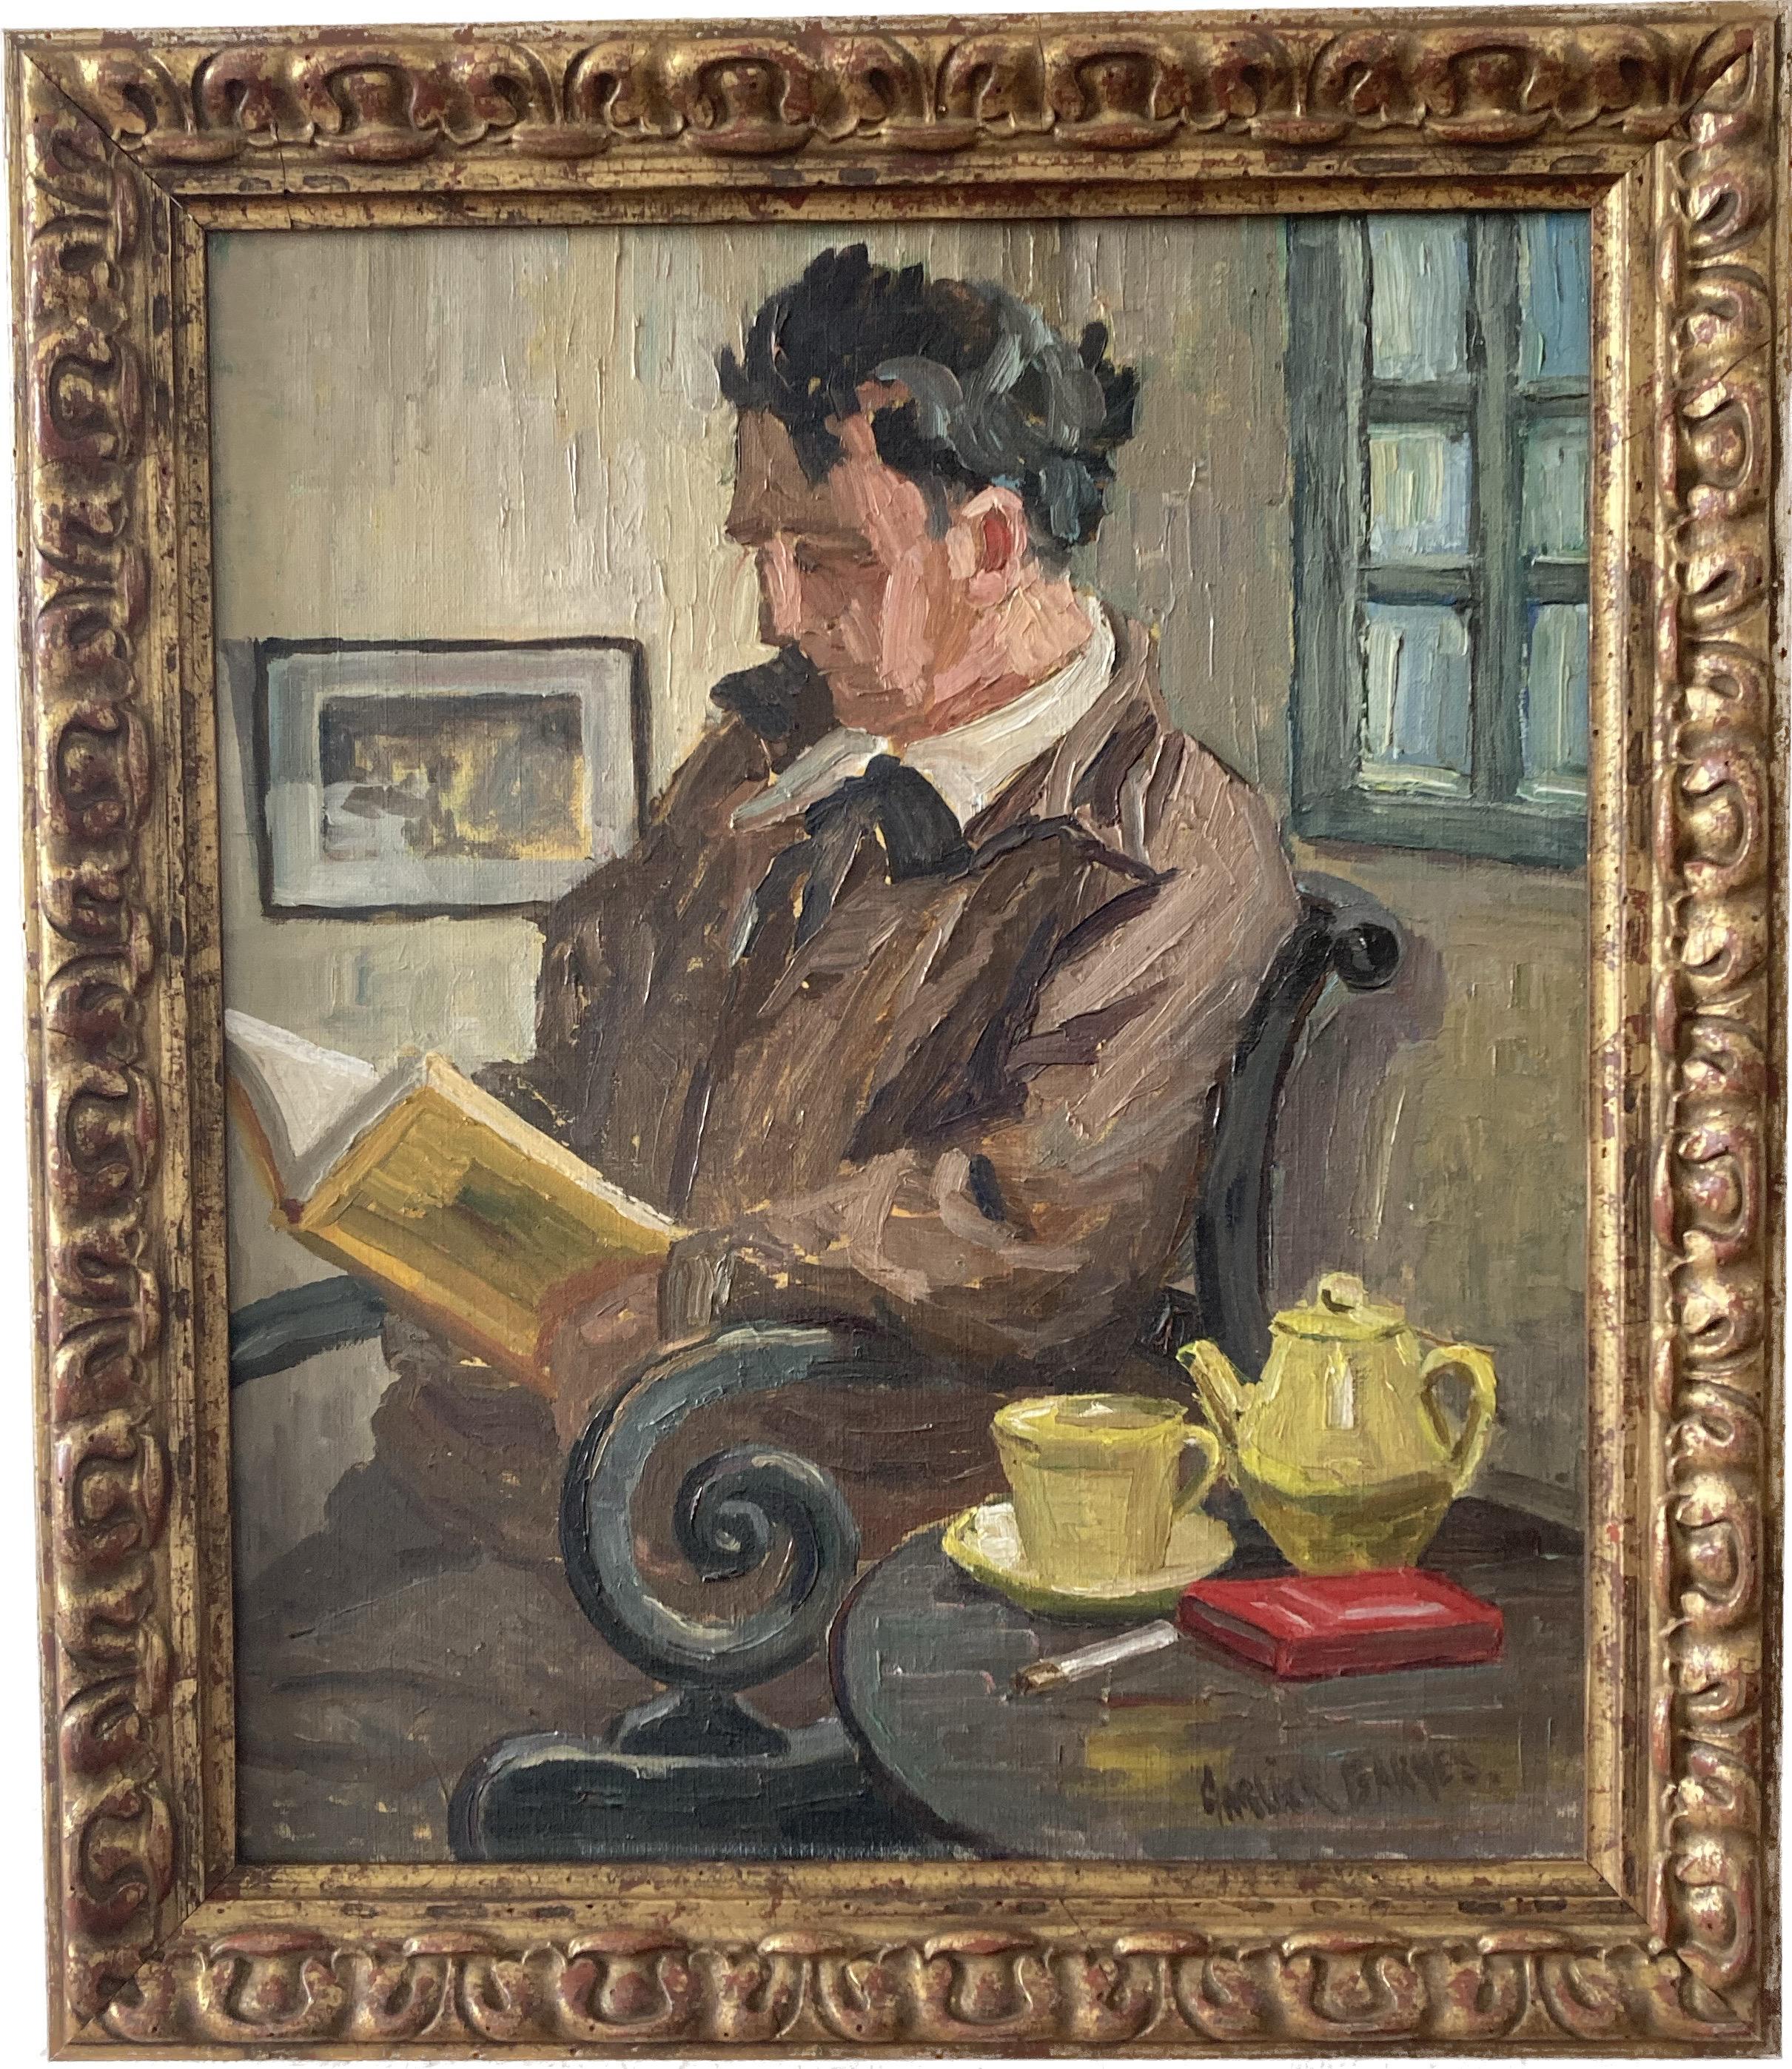 Garlick Barnes Interior Painting - Female Cornish artist, Walter Sickert pupil, Cubist portrait of man in interior